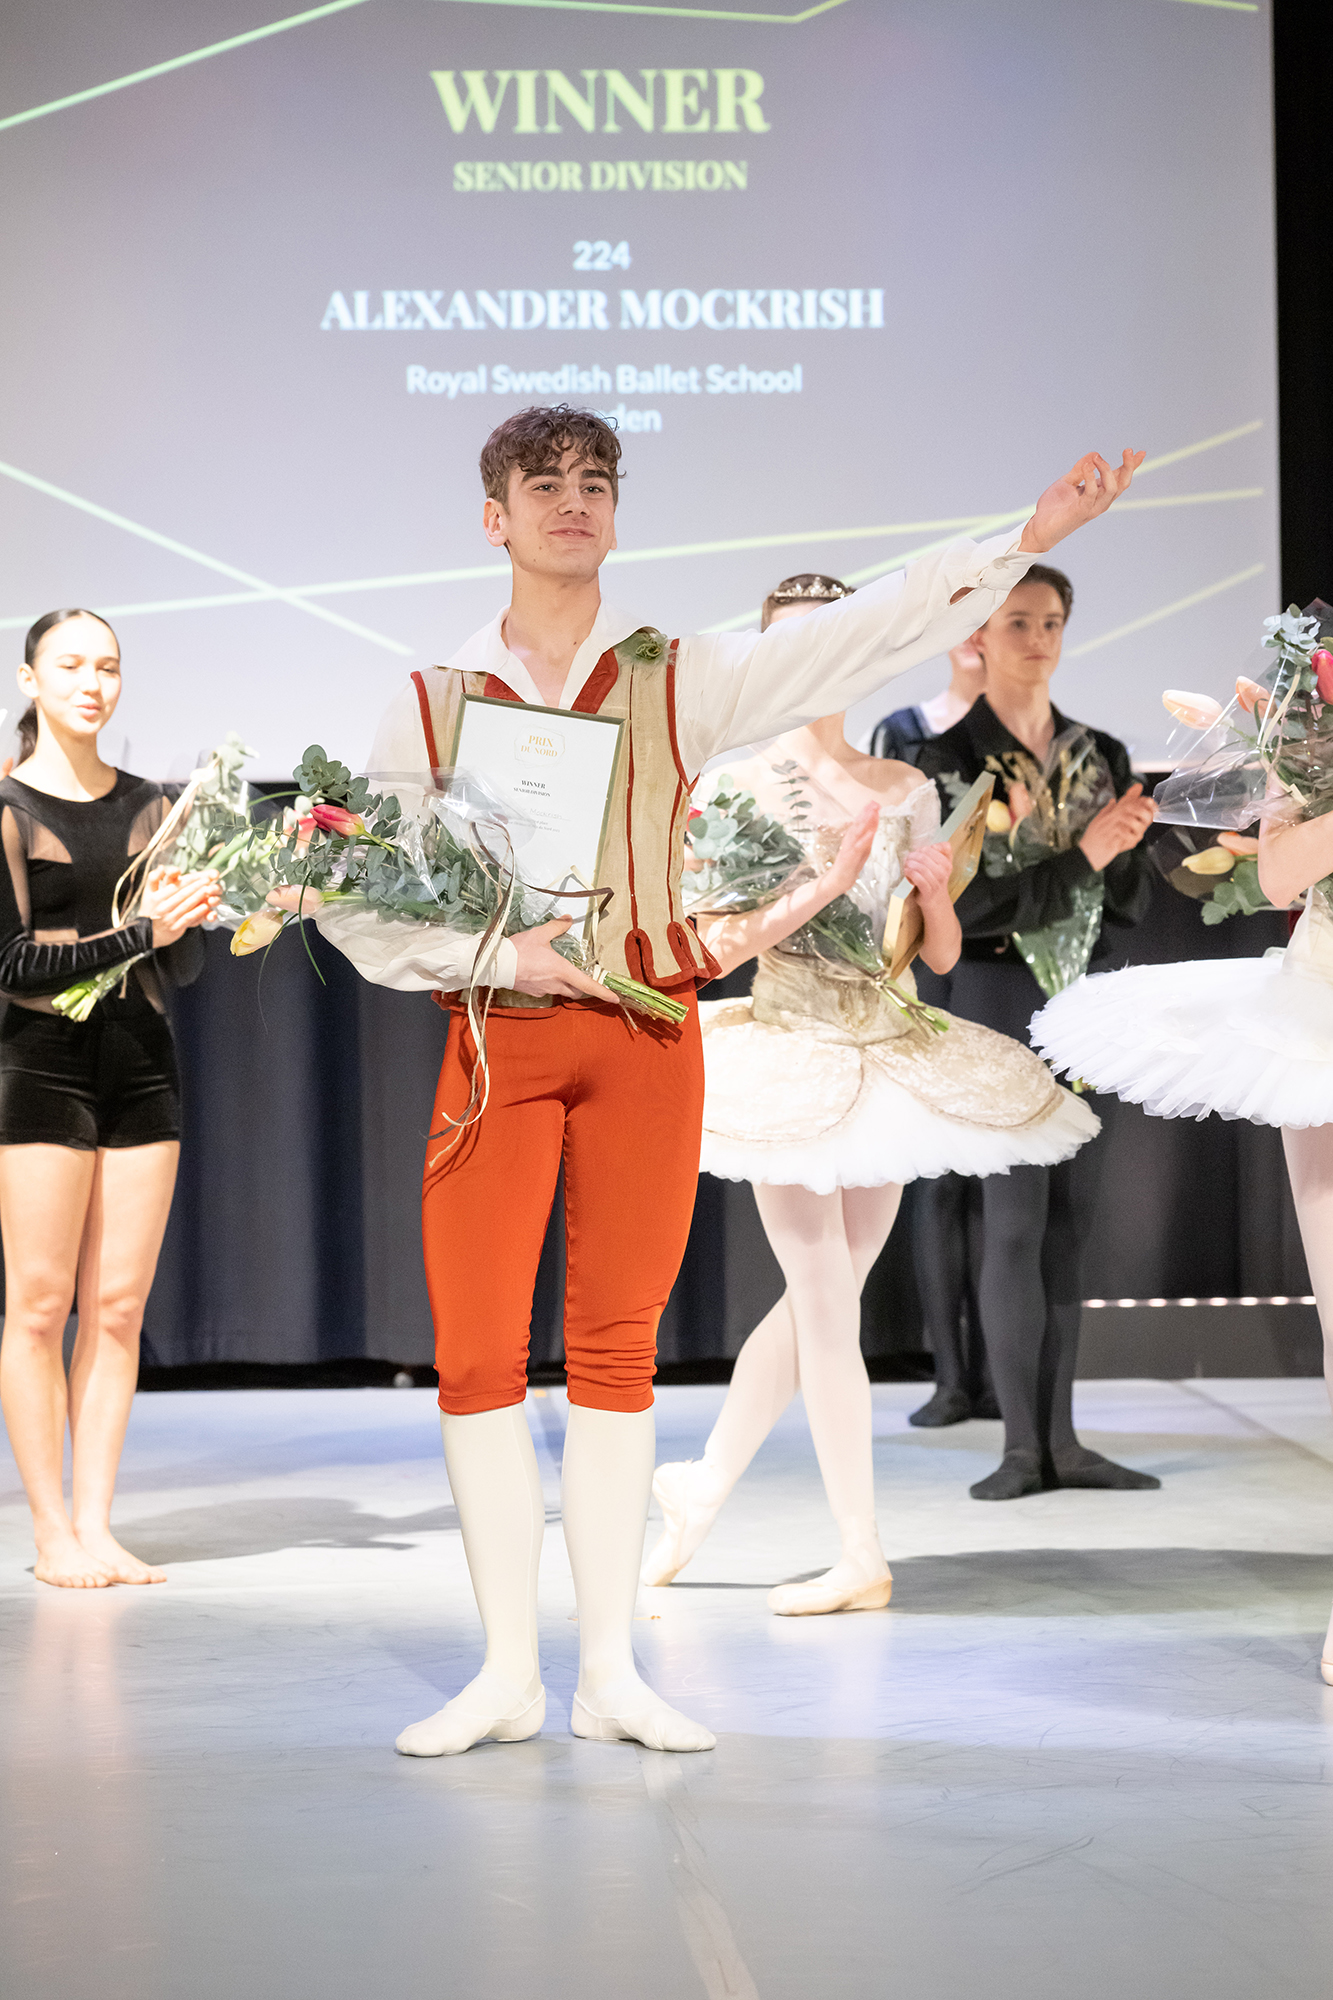 1# place and the winner of the Senior Division of Prix du Nord 2023: 224 Alexander Mockrish, 16 years old Royal Swedish Ballet School, Stockholm Sweden.